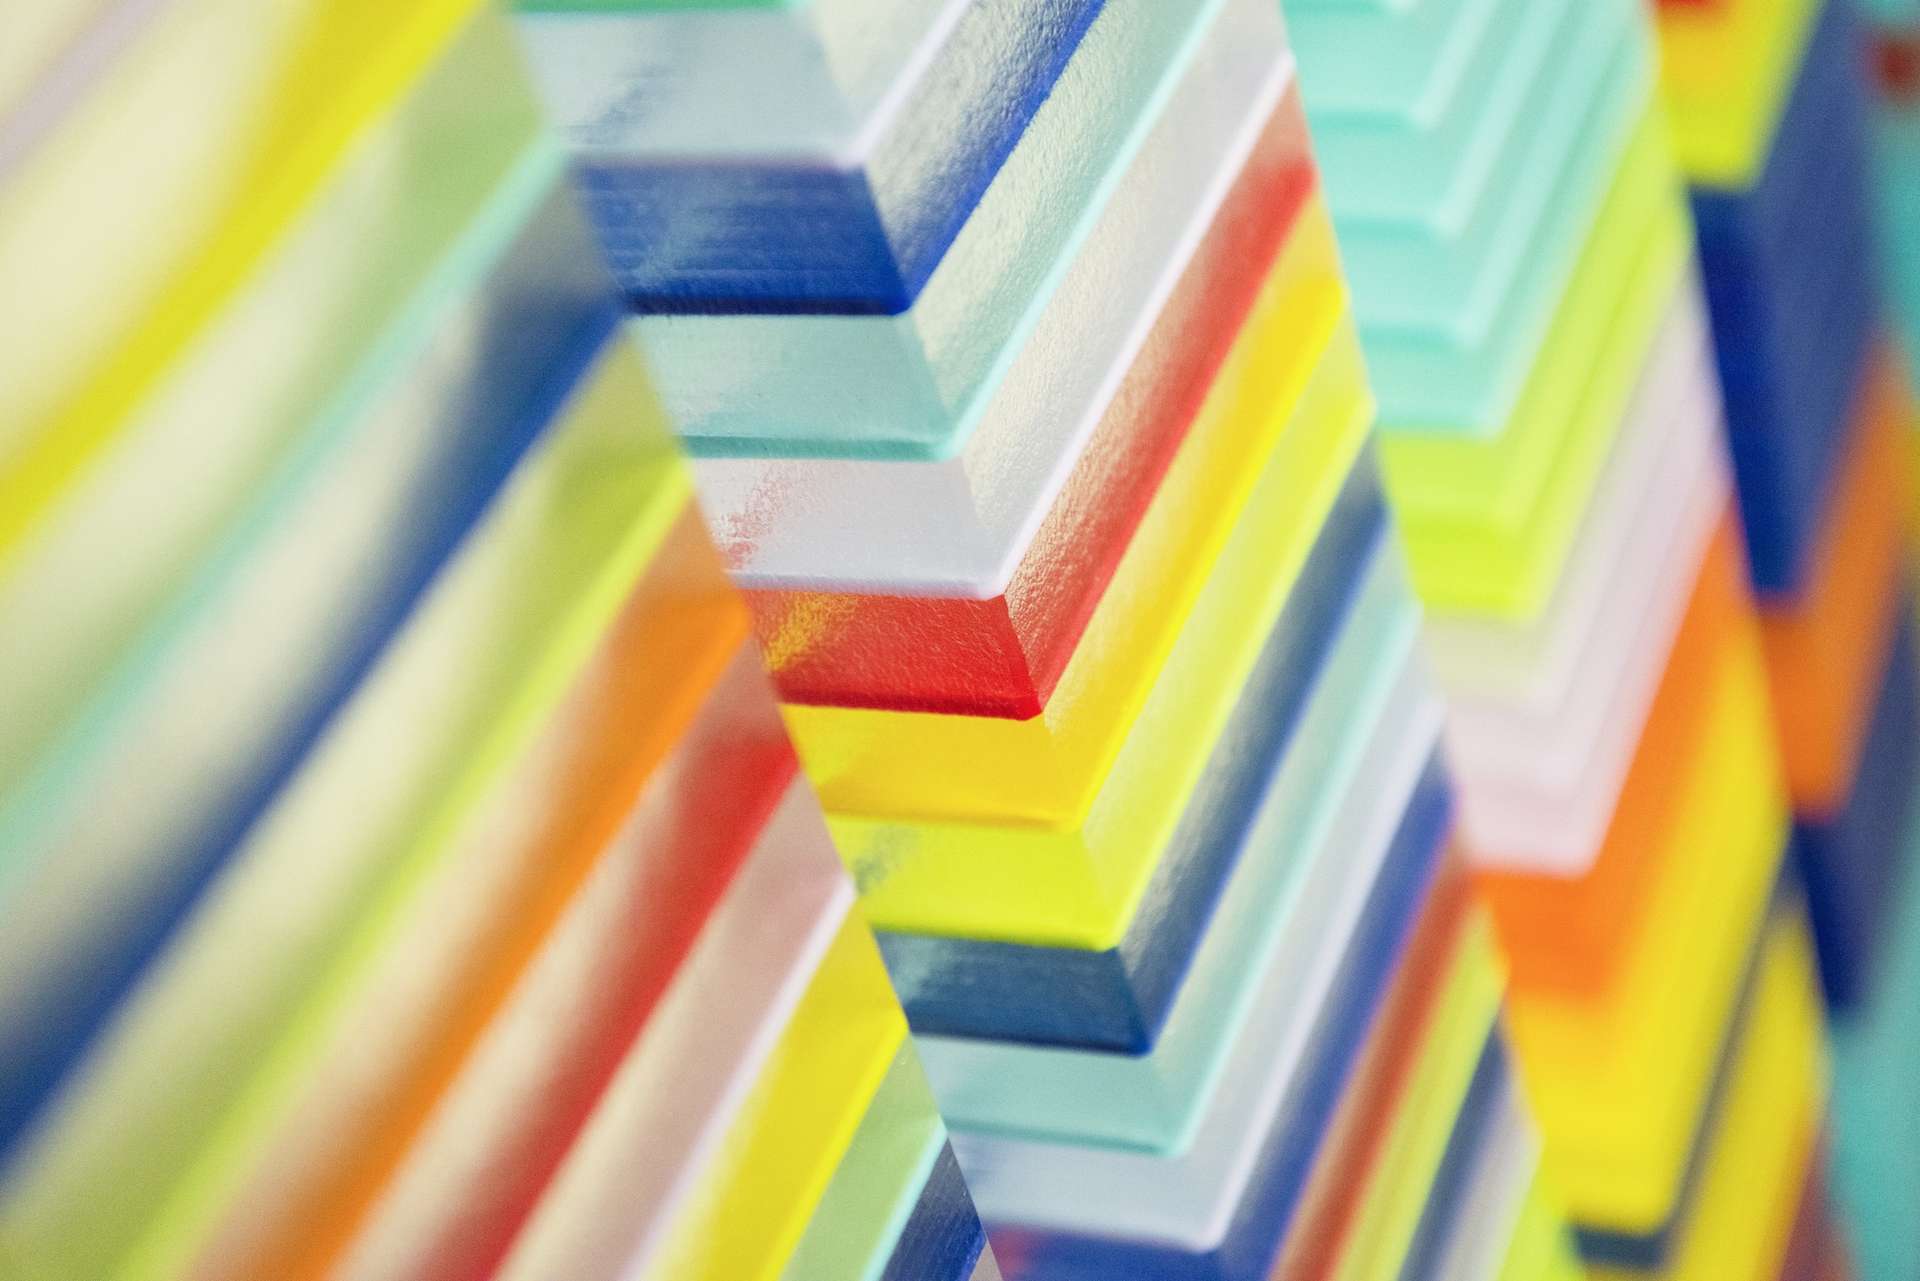 Coloured glass blocks